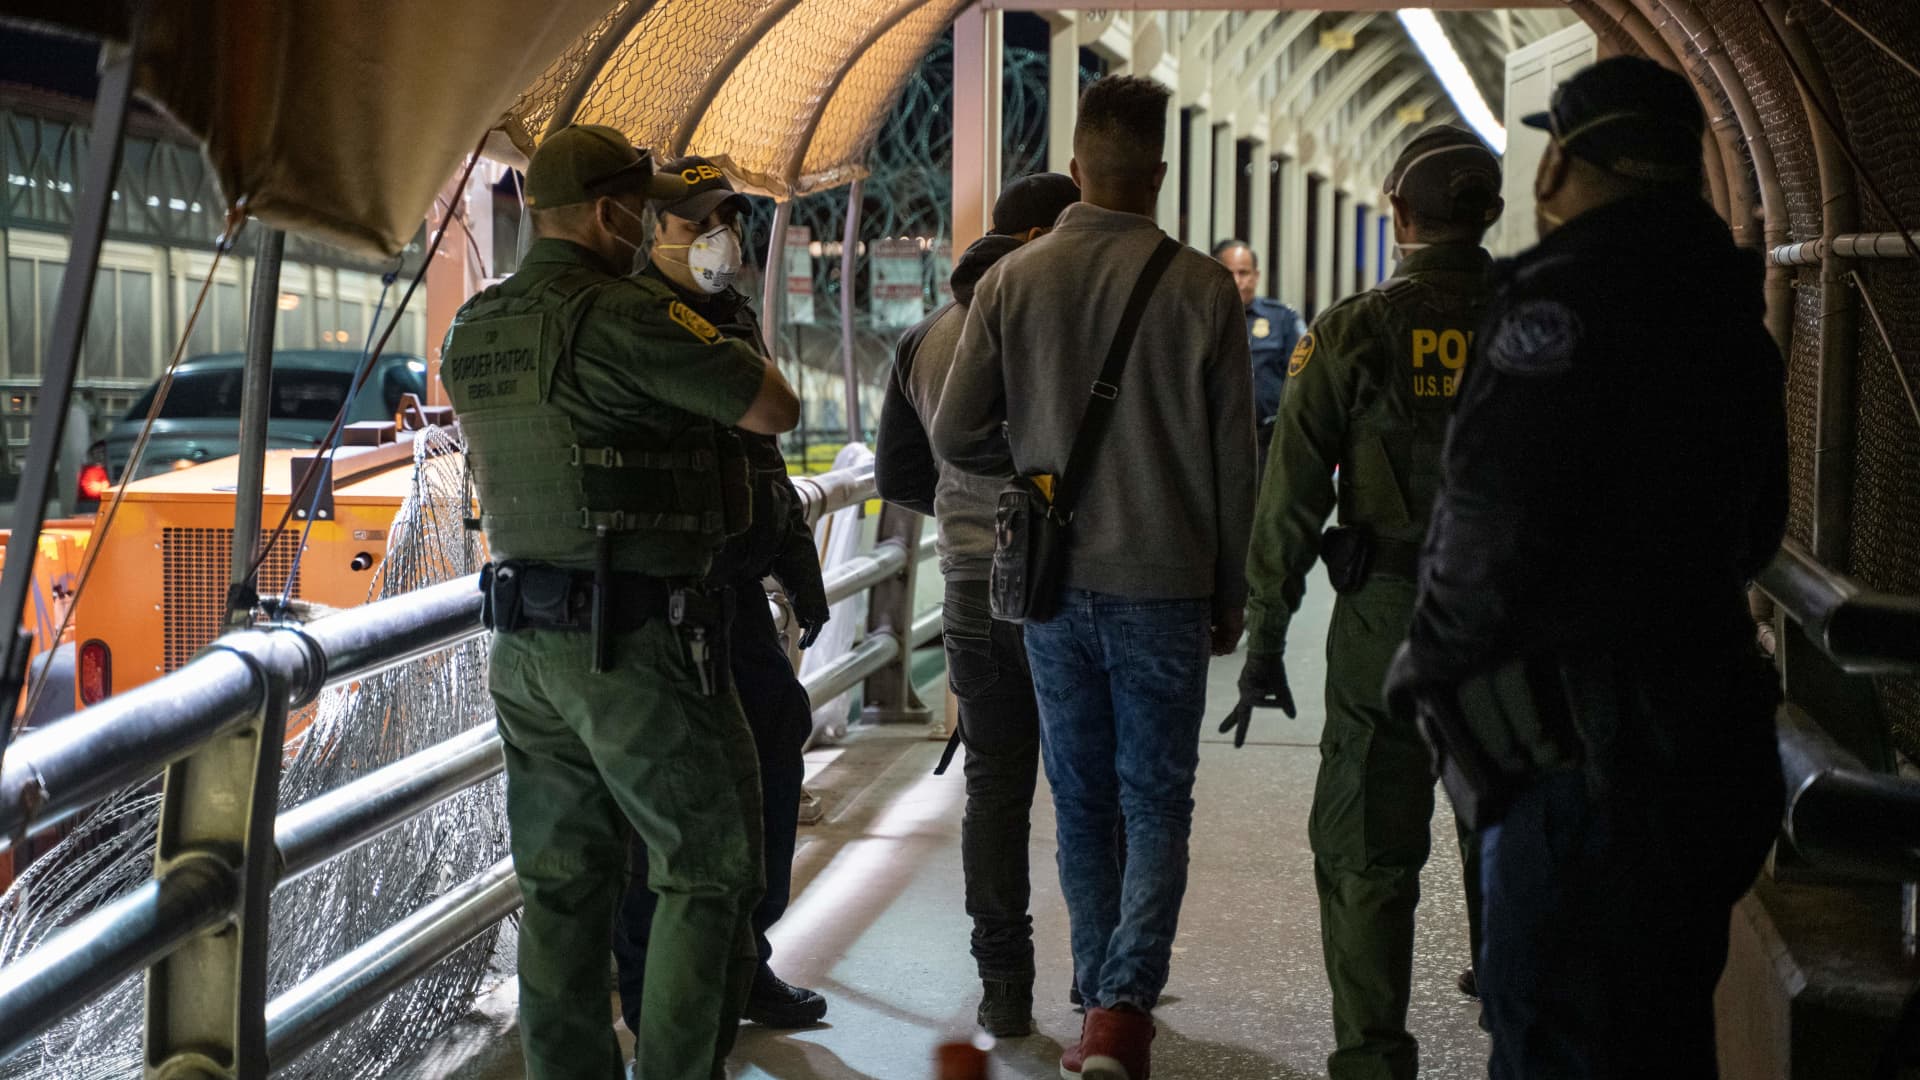 U.S. agents escort asylum applicants down to the U.S. side of the bridge on April 1, 2020 at the Paso del Norte International Bridge in Ciudad Juarez, Mexico.